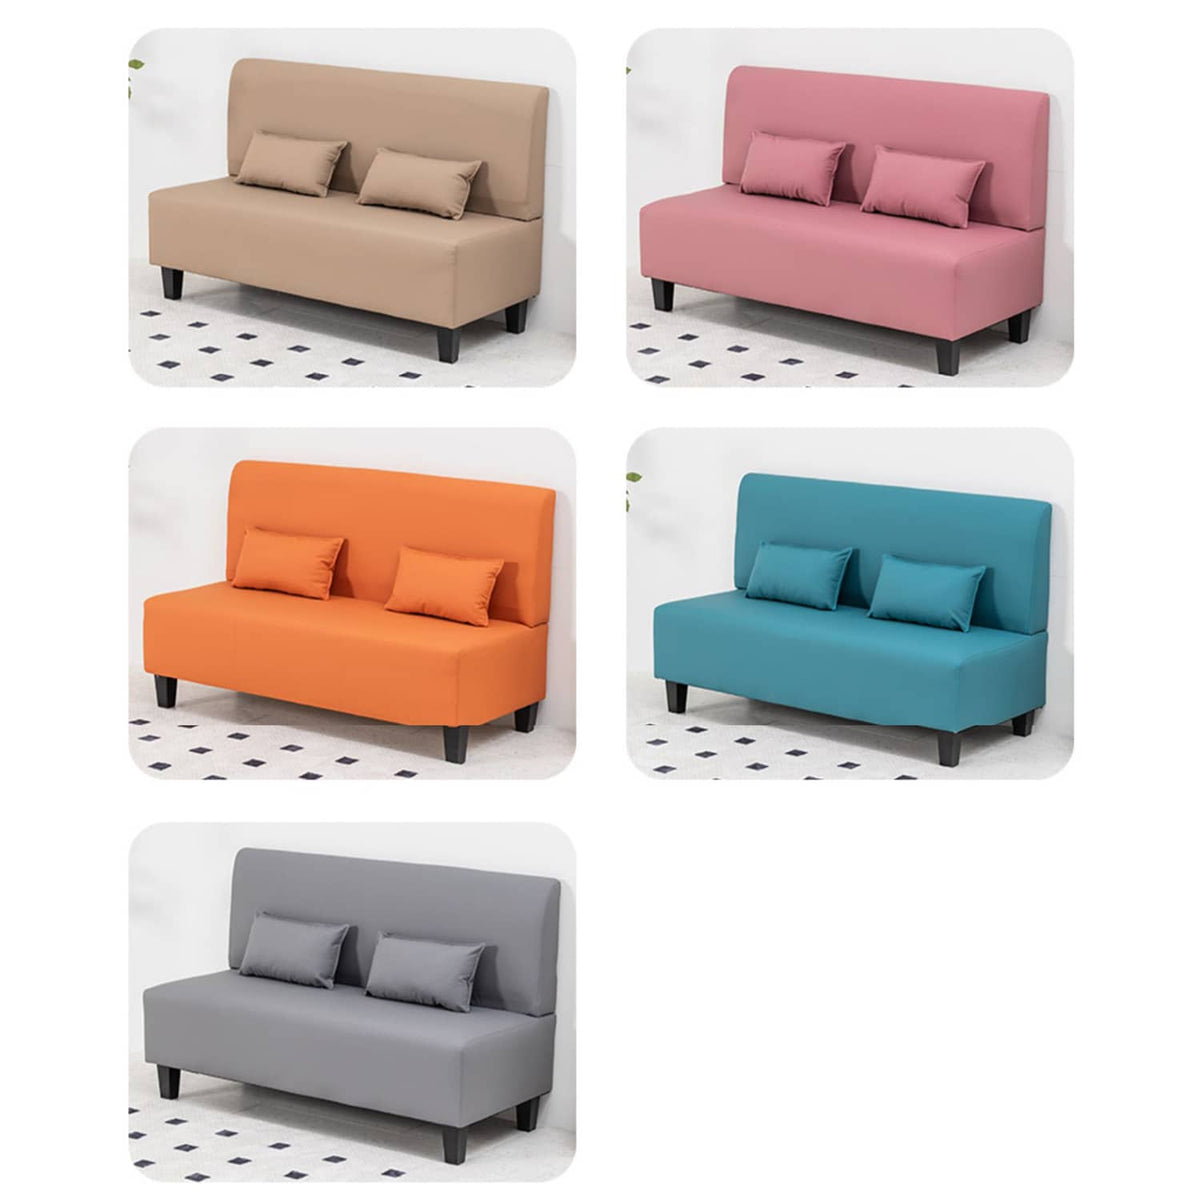 Modern Techno Fabric Sofa in Dark Blue, Light Gray, Khaki, and Orange with Wood Accents - Durable Nylon Upholstery qm-14